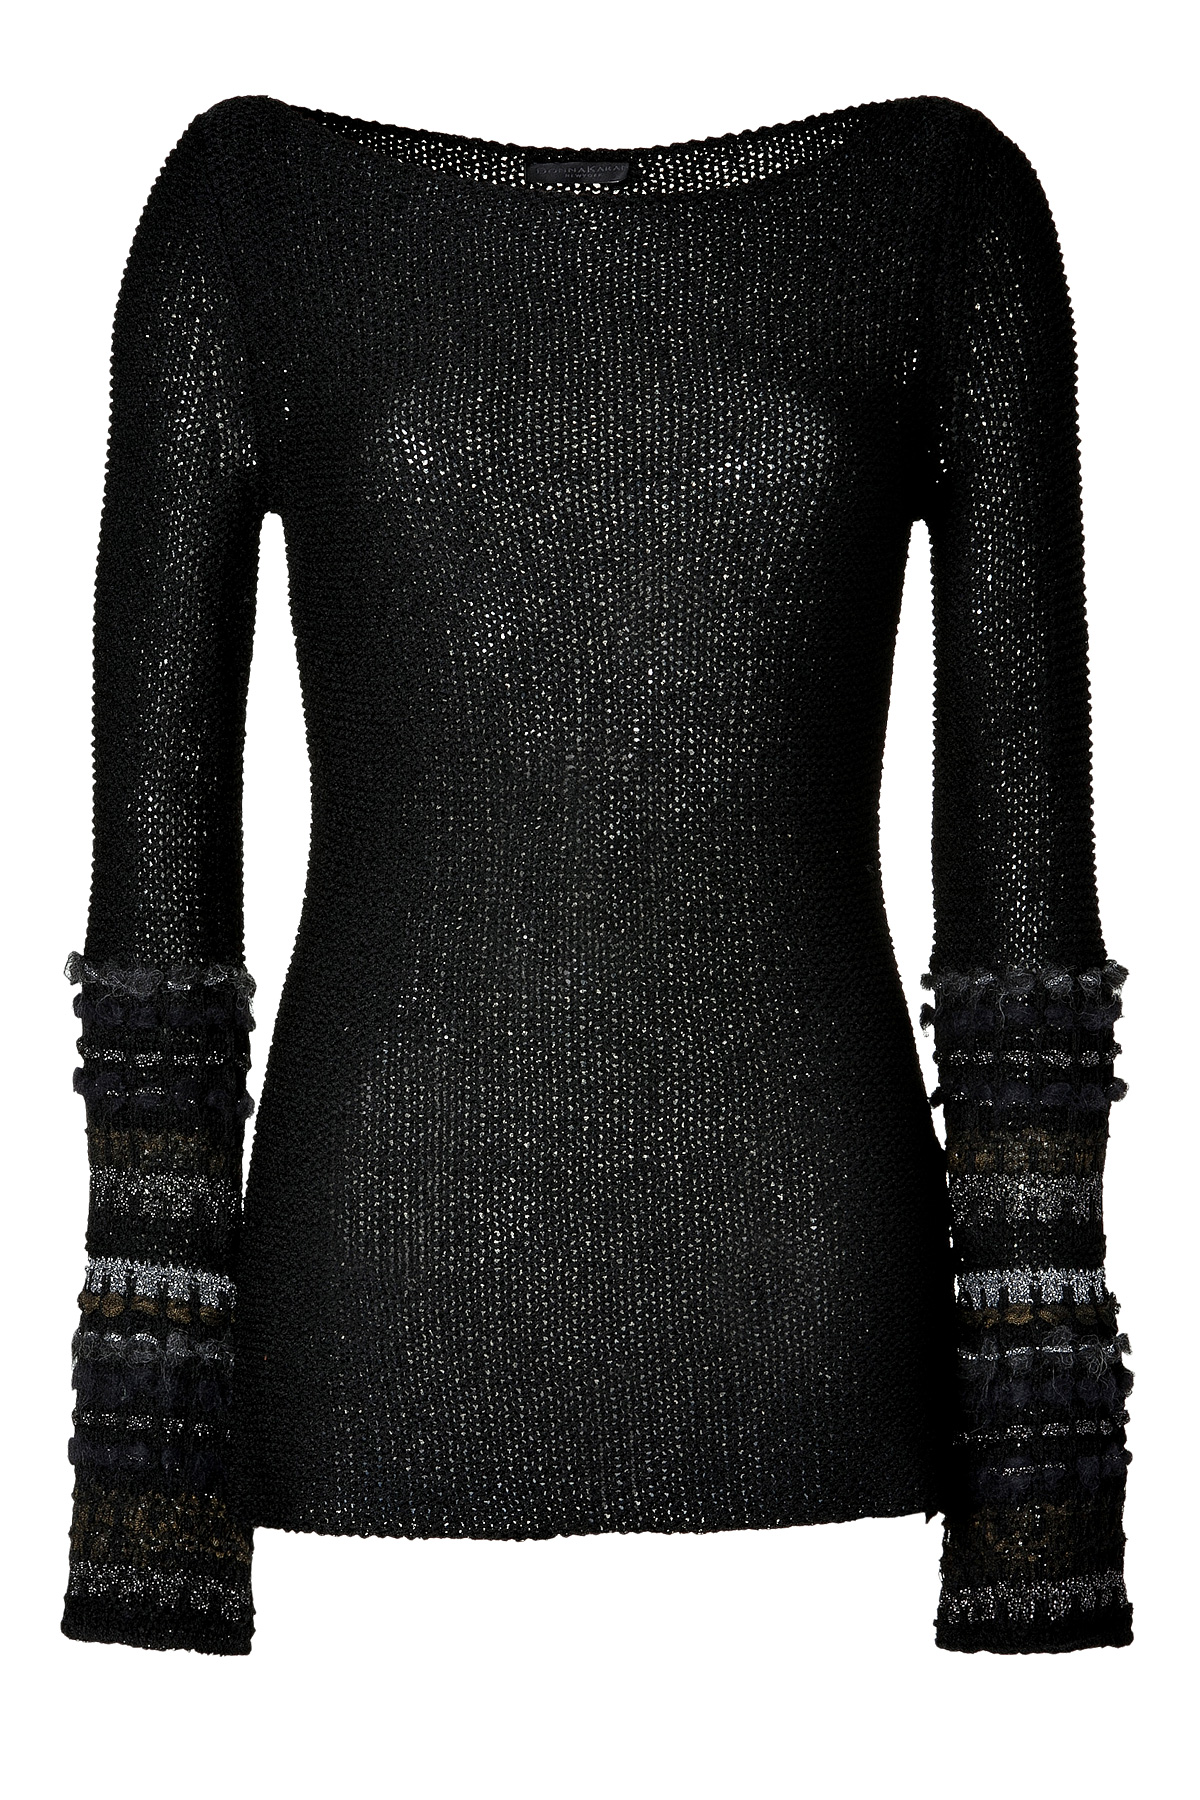 Donna karan Black Open Knit Pullover with Metallic Trim in Black | Lyst